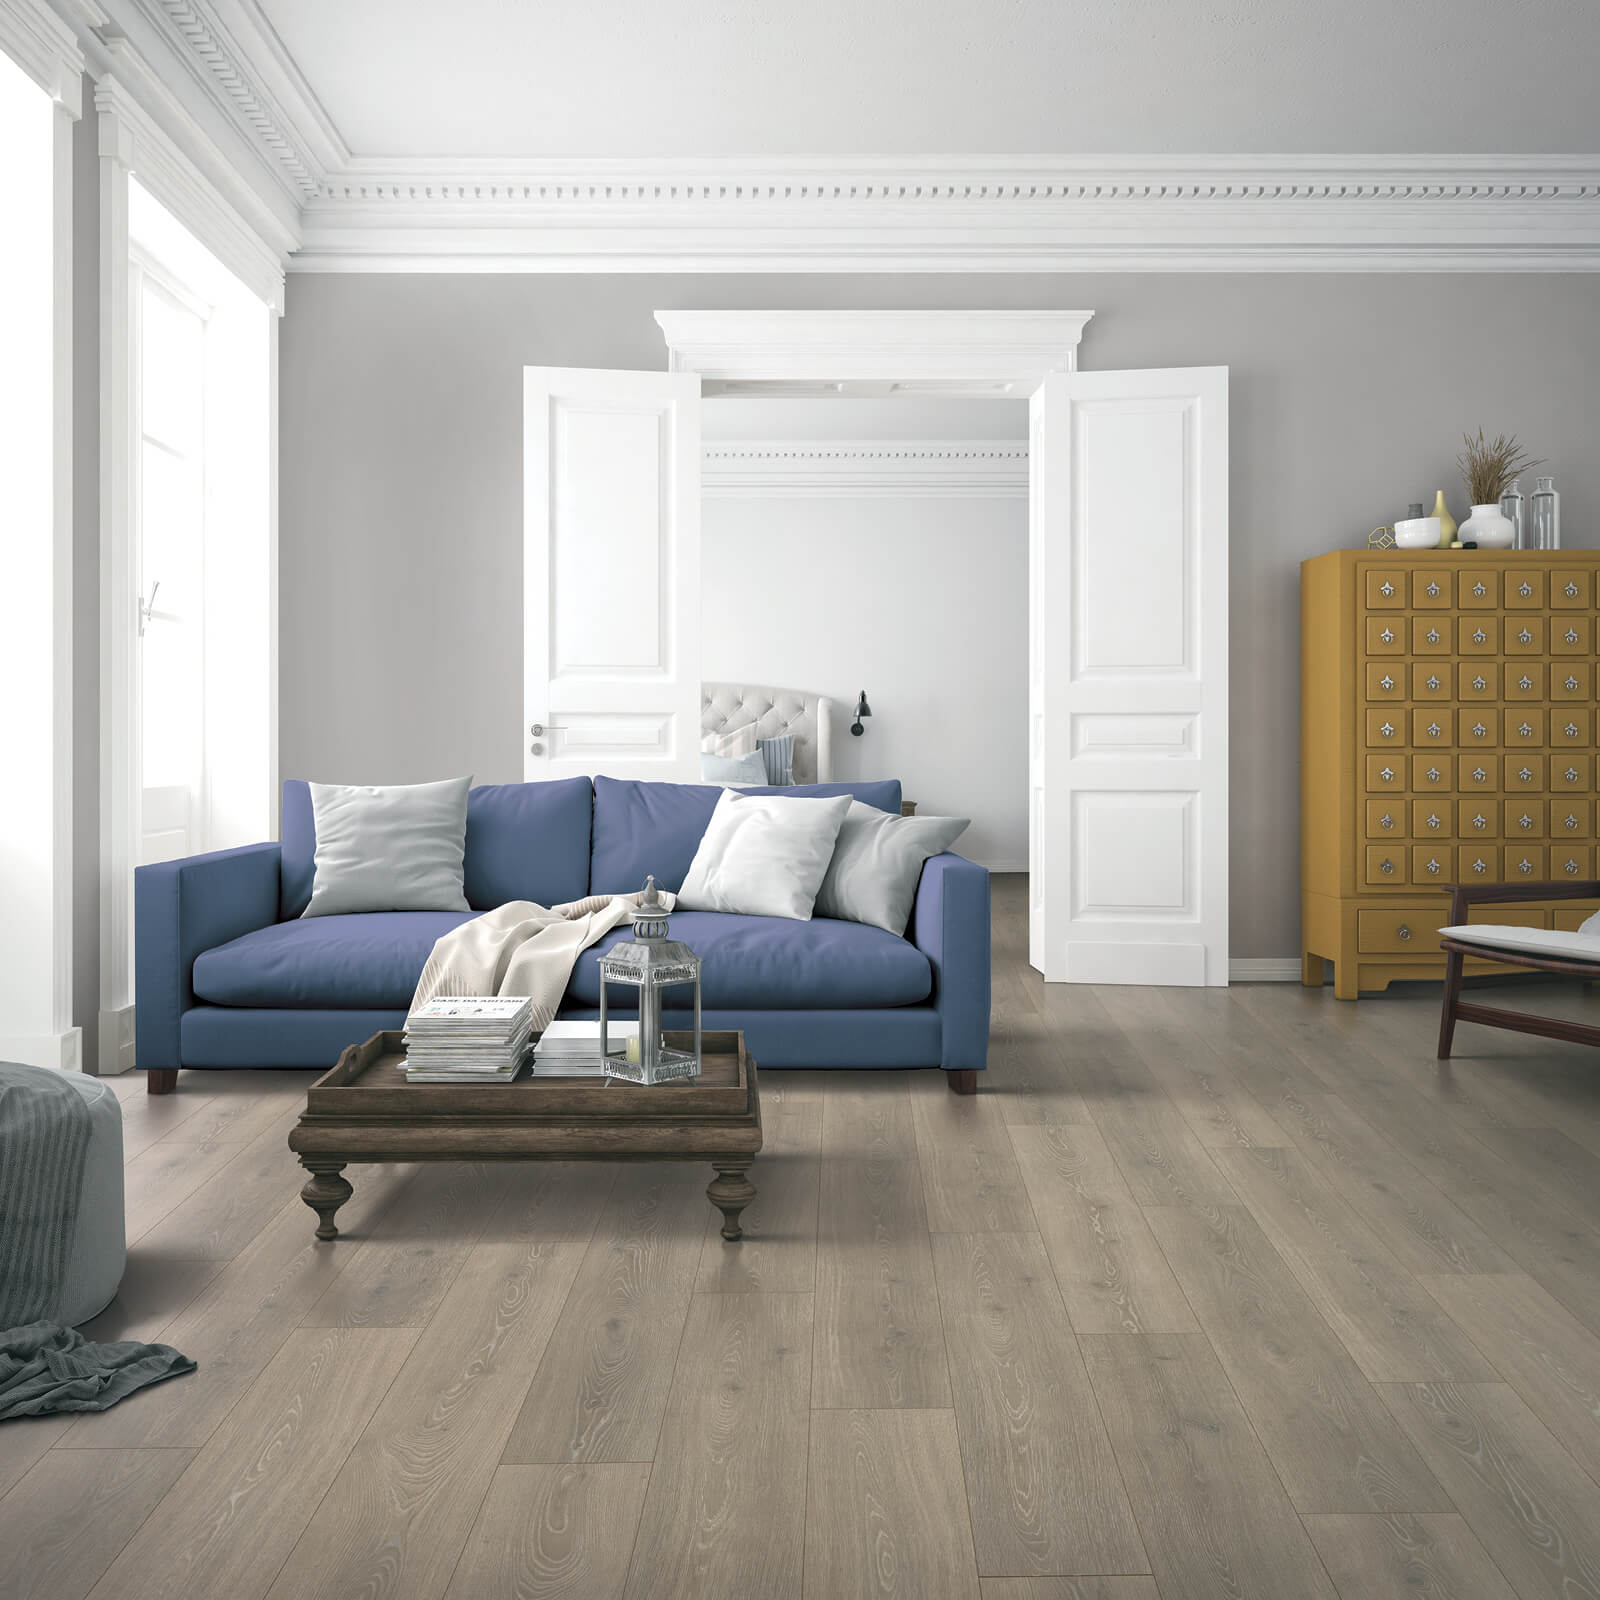 Sofa on laminate flooring | Flooring Company